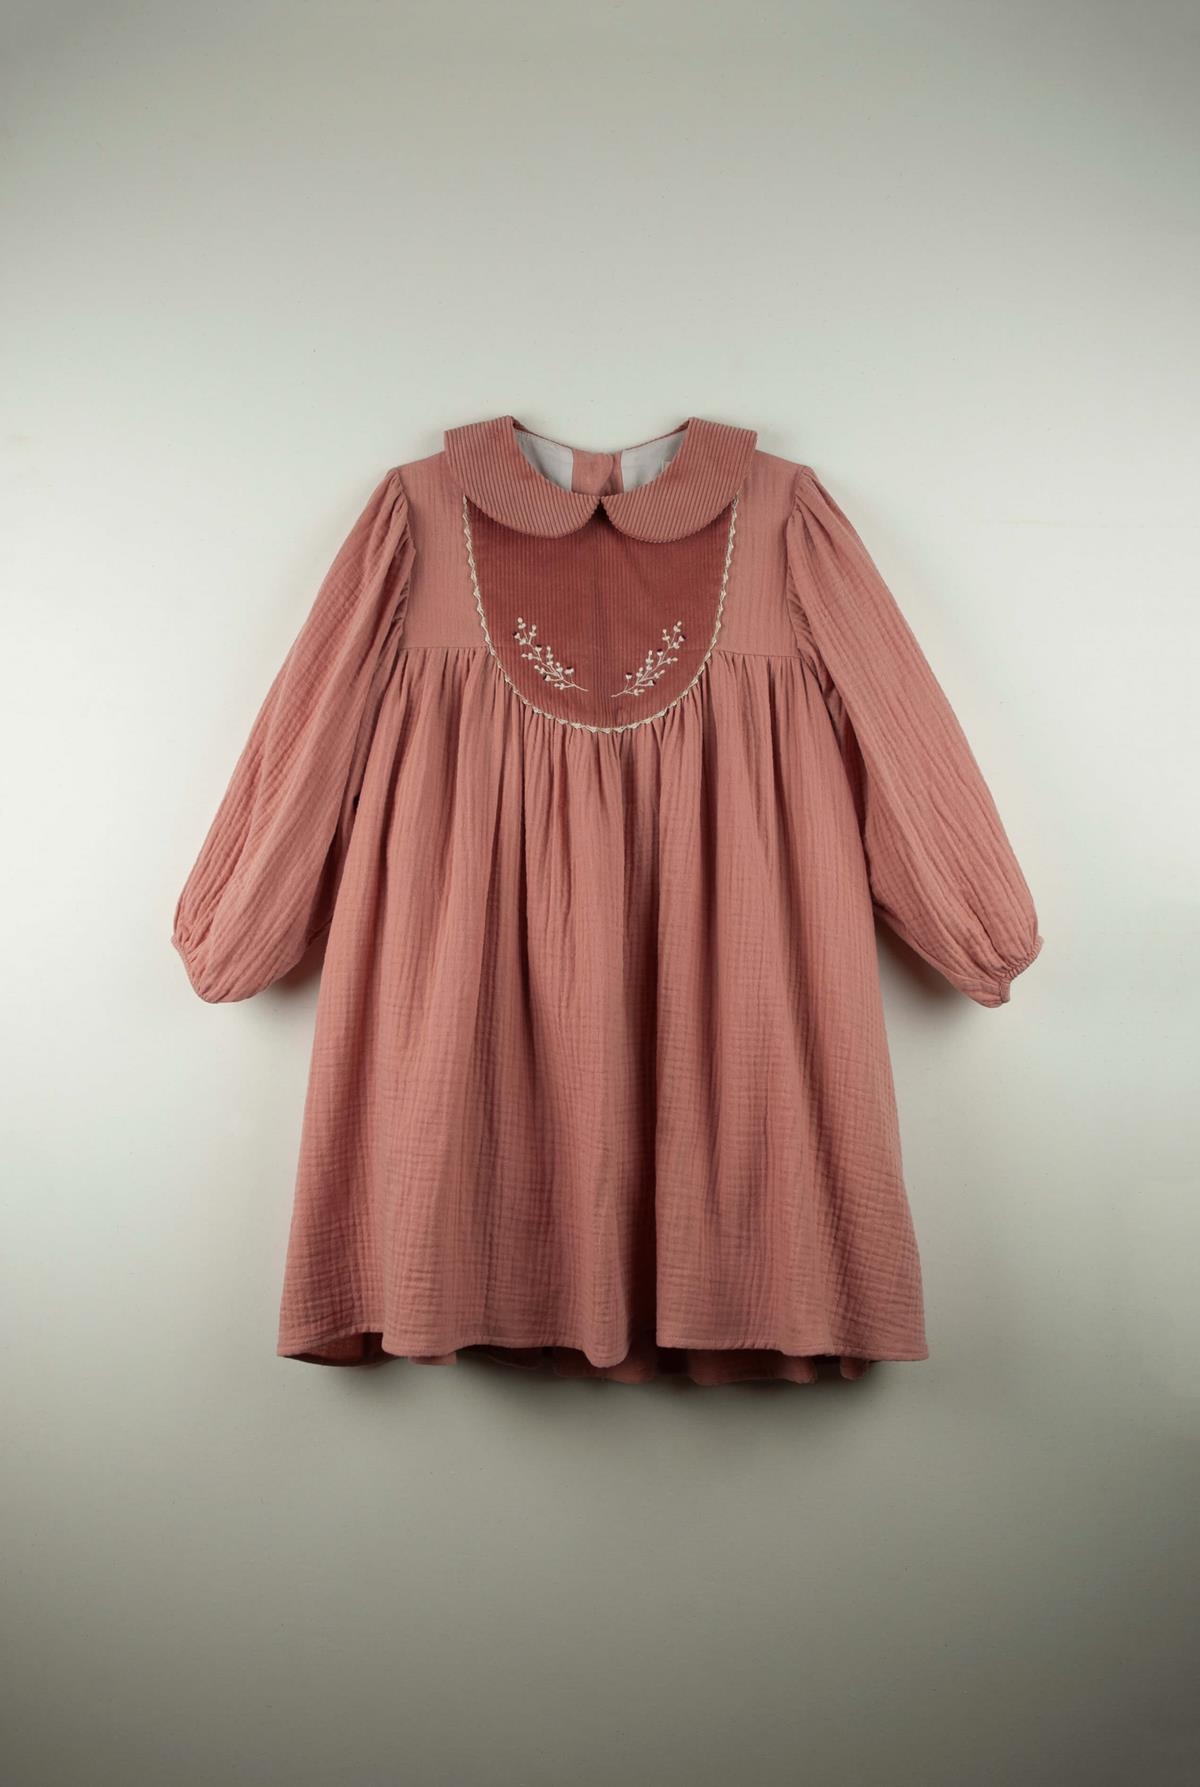 Mod.34.1 Pink embroidered dress with yoke | AW21.22 Mod.34.1 Pink embroidered dress with yoke | 1